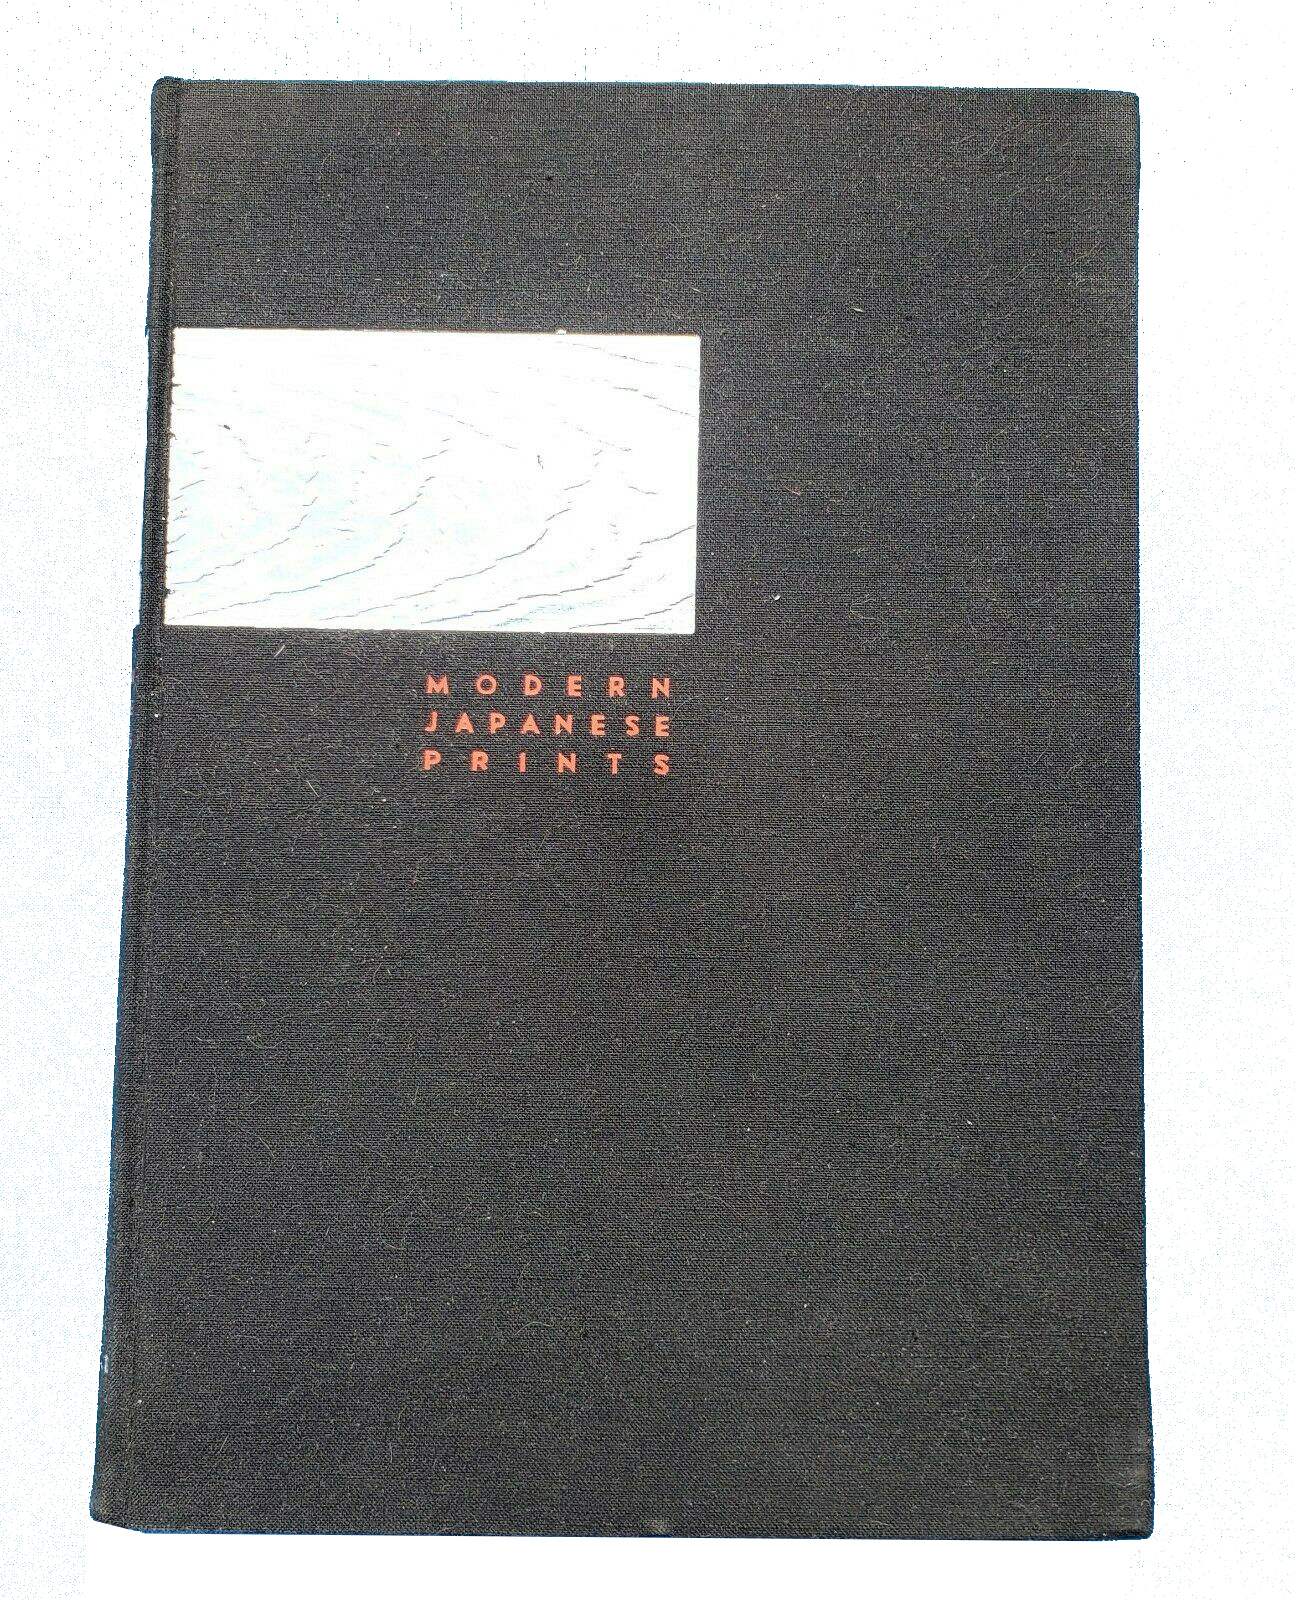 Modern Japanese Prints An Art Report by Oliver Statler Signed